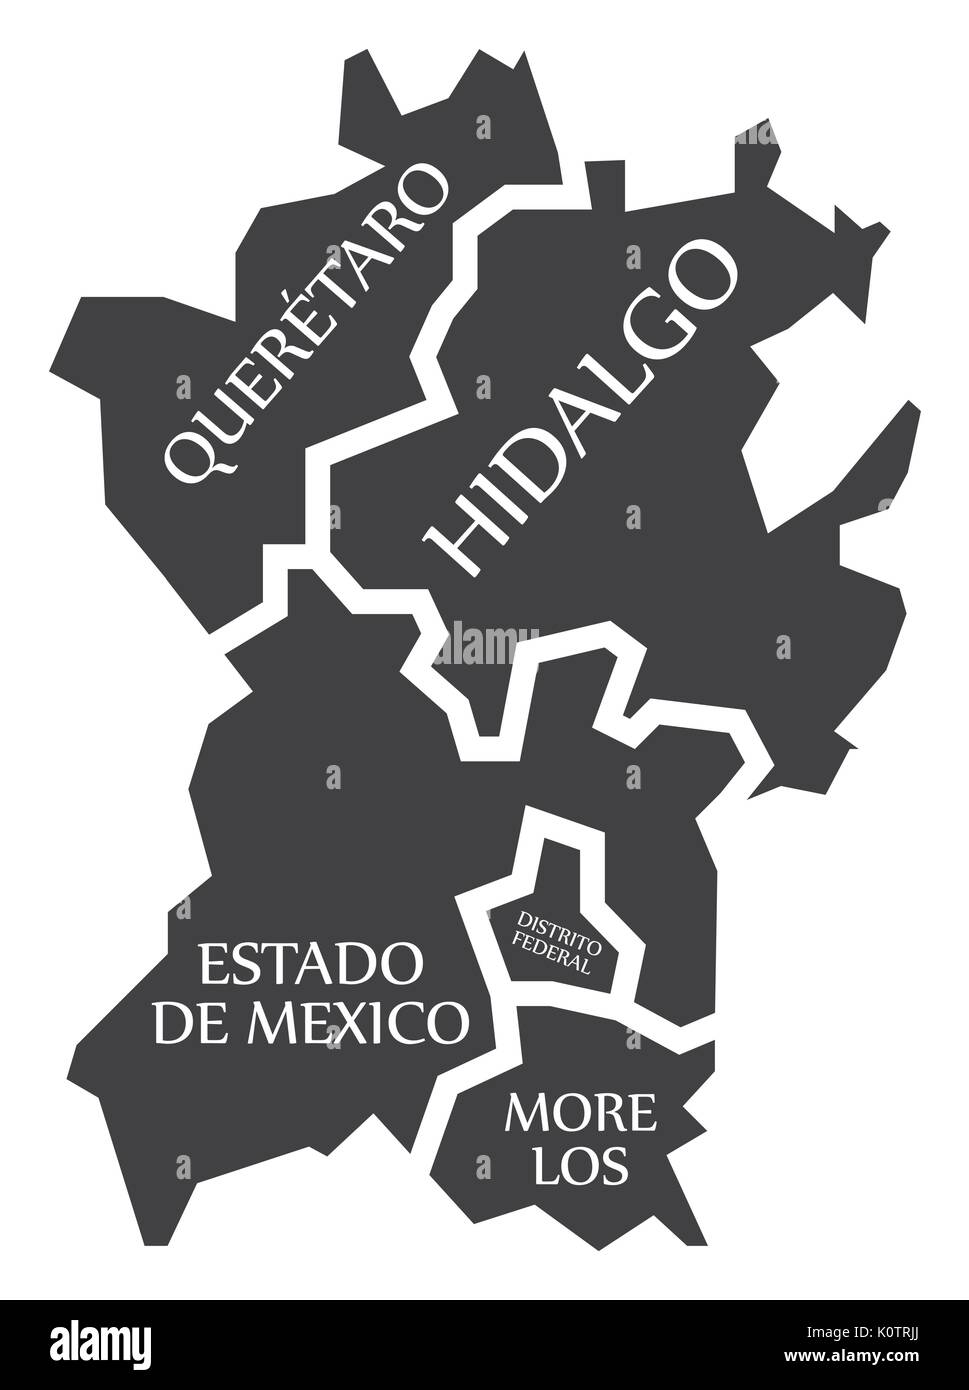 Queretaro - Hidalgo - Estado de Mexico - Distrito Federal - Morelos Map Mexico illustration Stock Vector